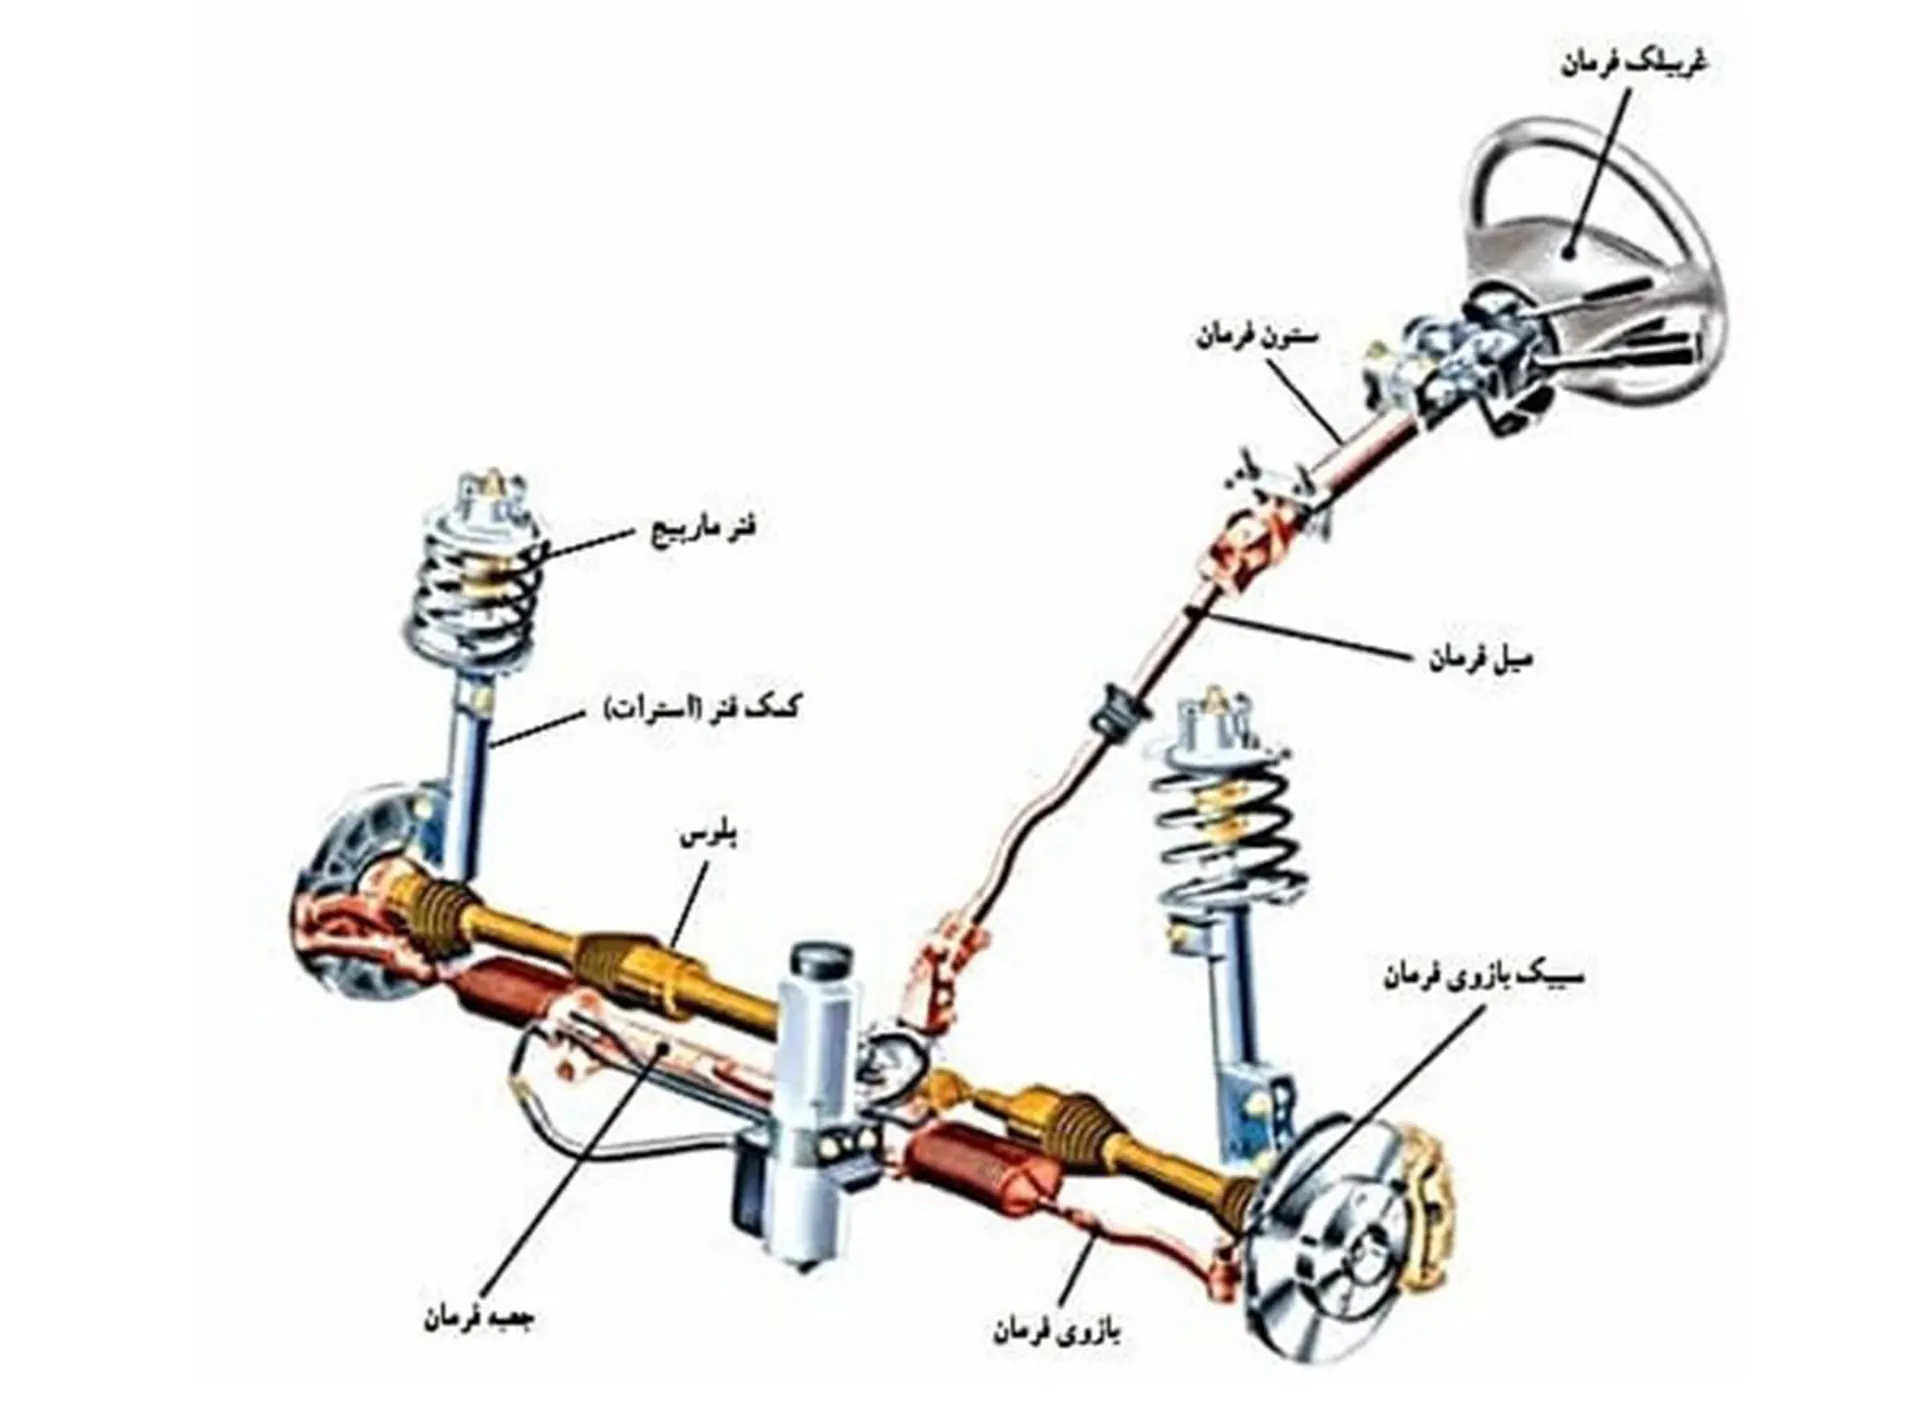 سیستم هدایت خودرو / Steering System